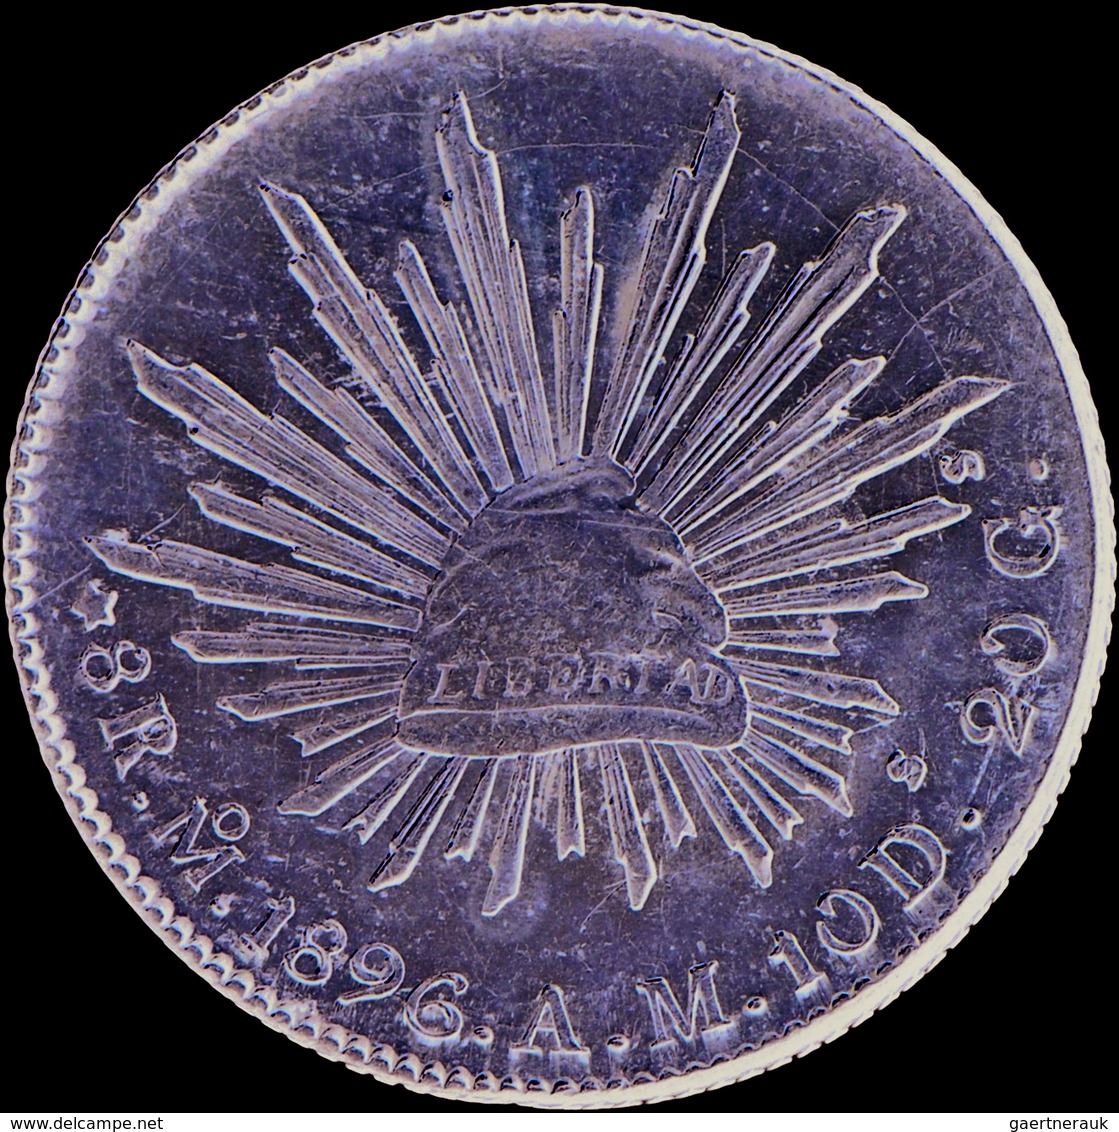 Mexiko: 8 Reales 1896 Mo - AM, Mexico City Mint, KM # 377.10, 27.08 G, Vorzüglich. - Mexico